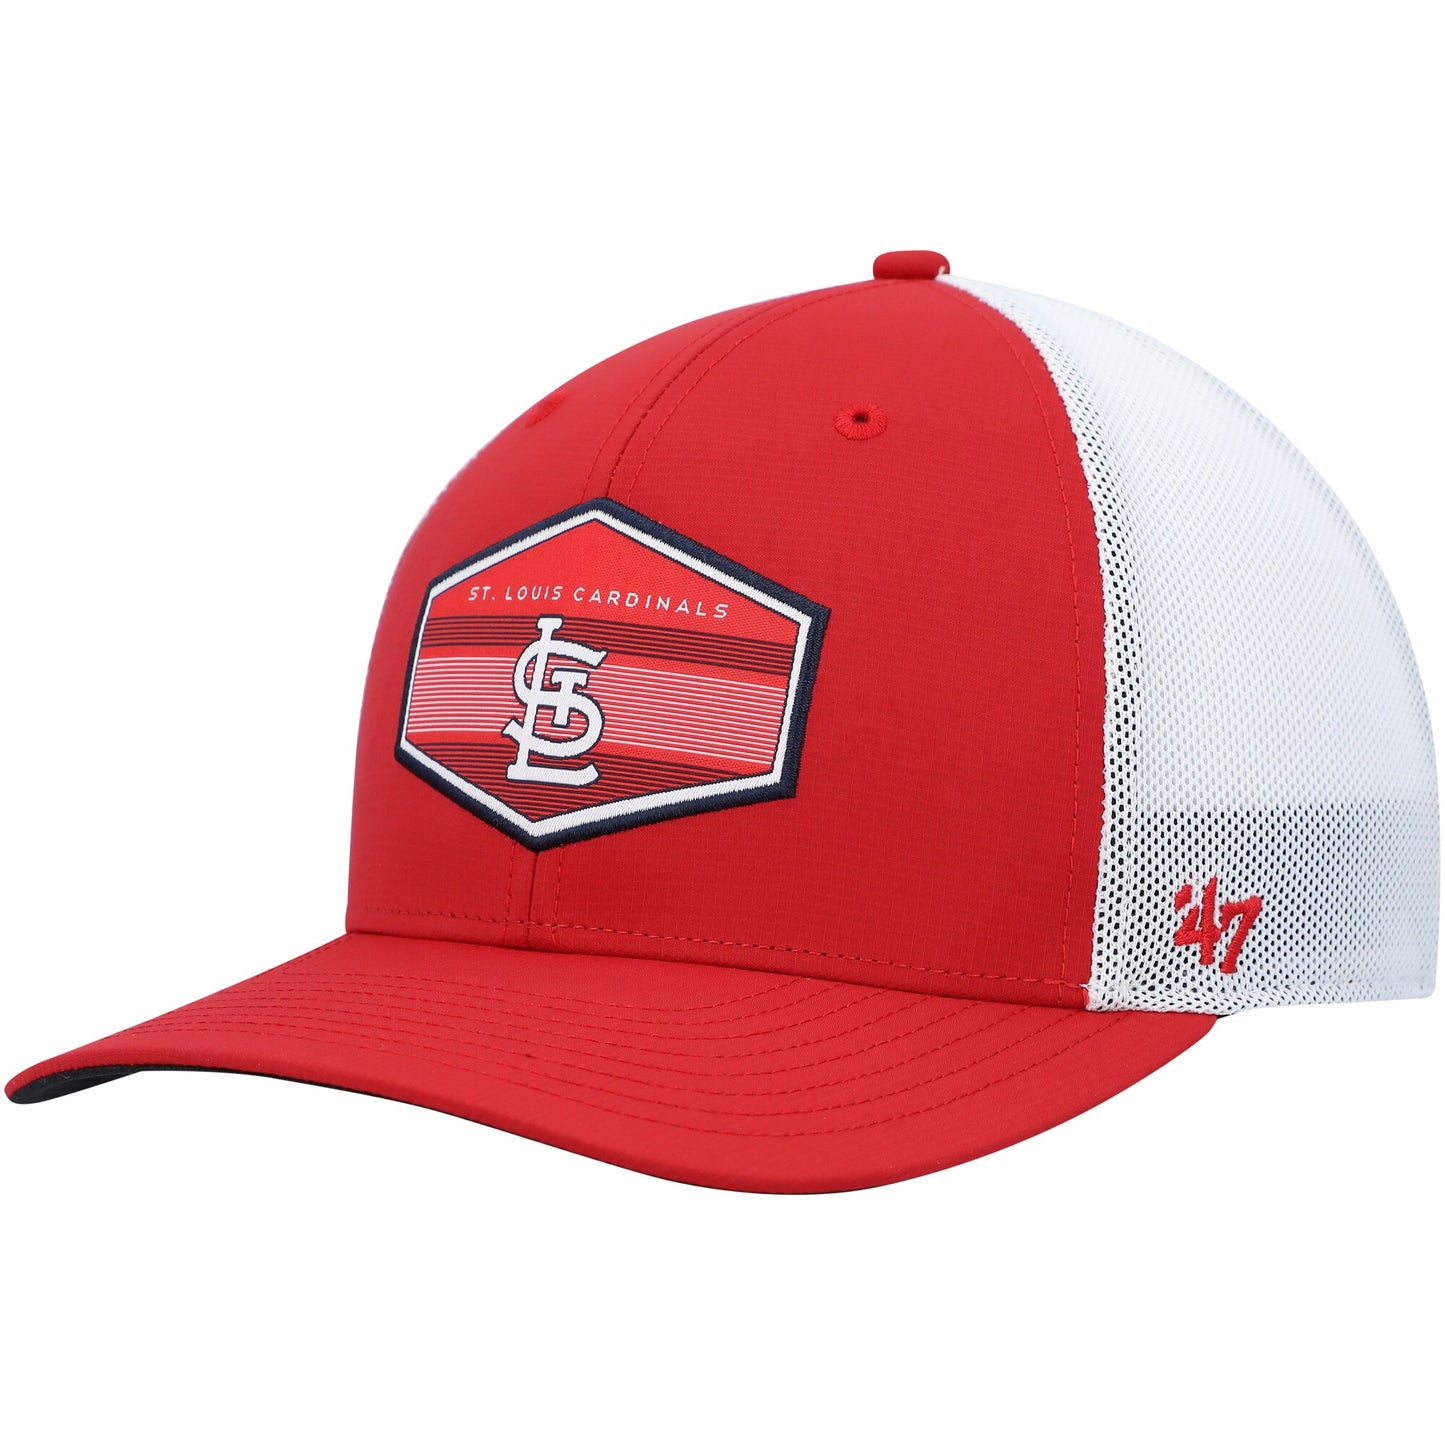 St. Louis Cardinals '47 Burgess Trucker Snapback Hat - Red/White